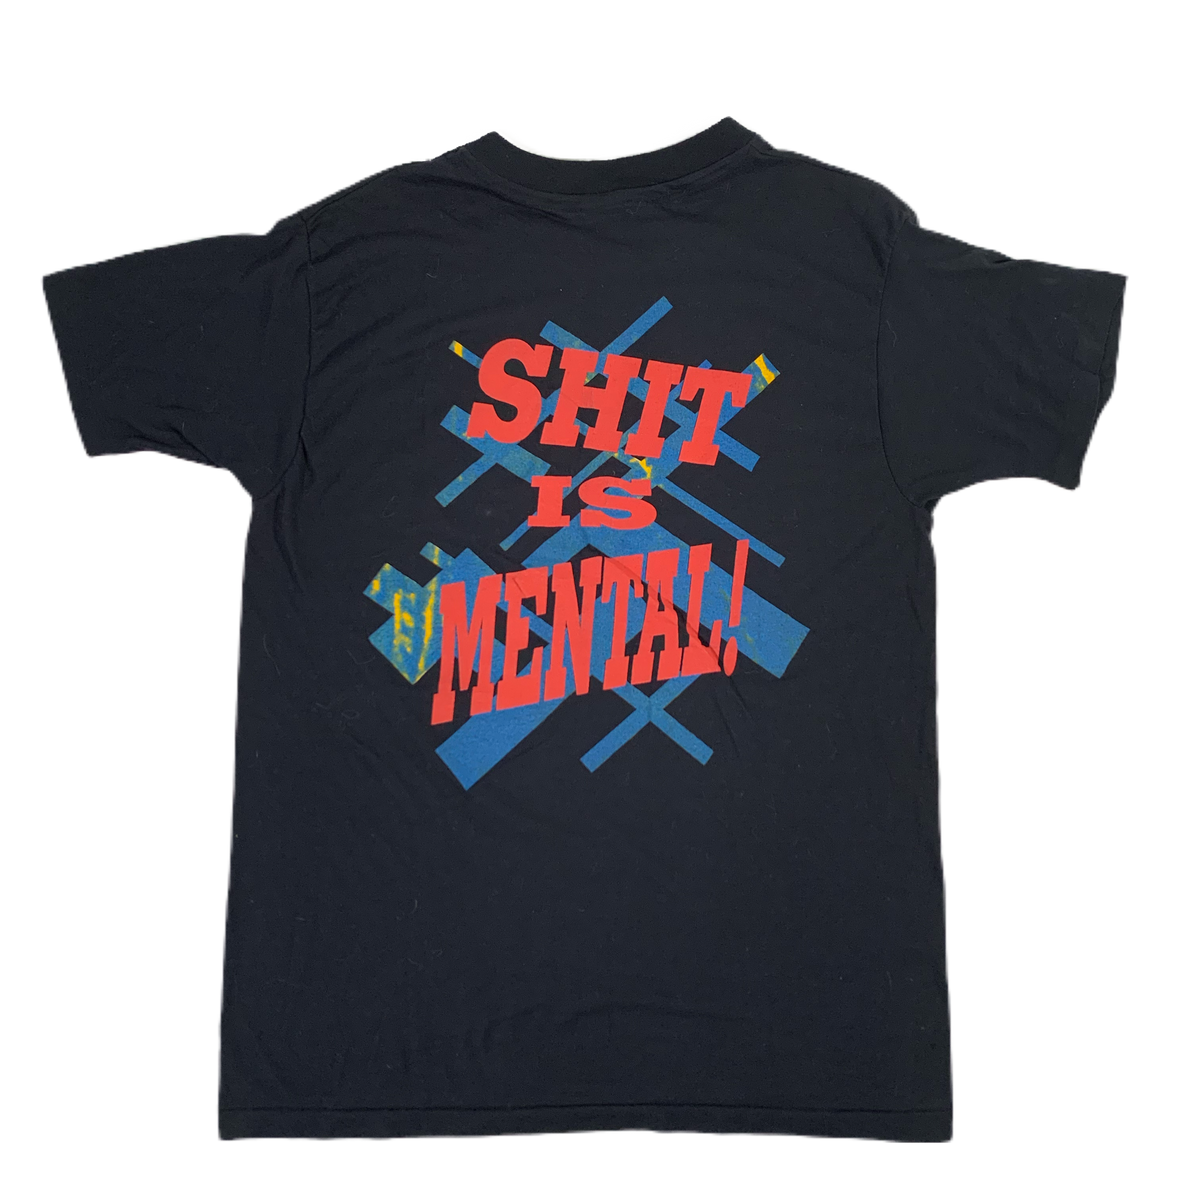 Vintage Bell Biv Devoe “Shit Is Mental” T-Shirt - jointcustodydc